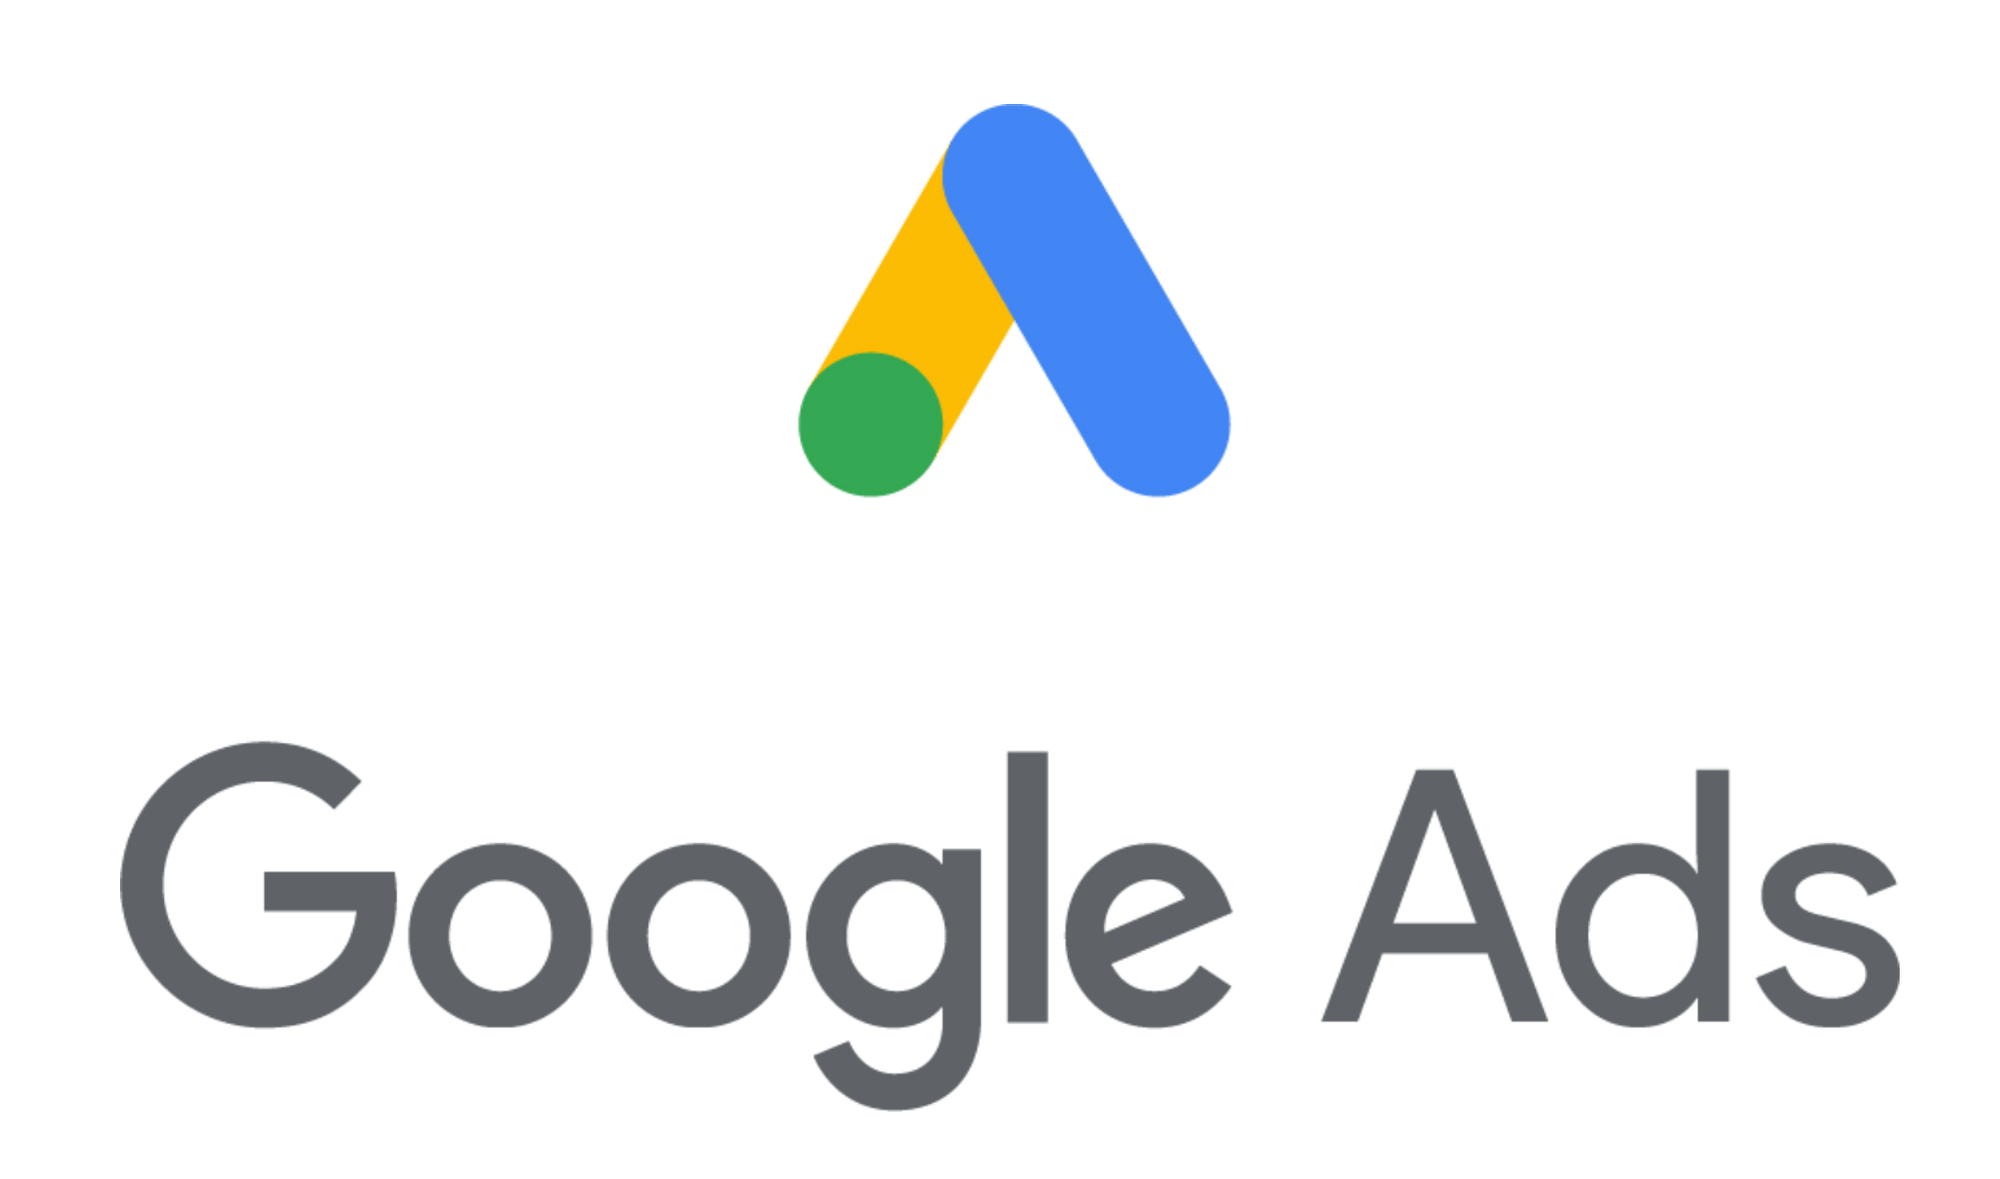 Google ads logo png